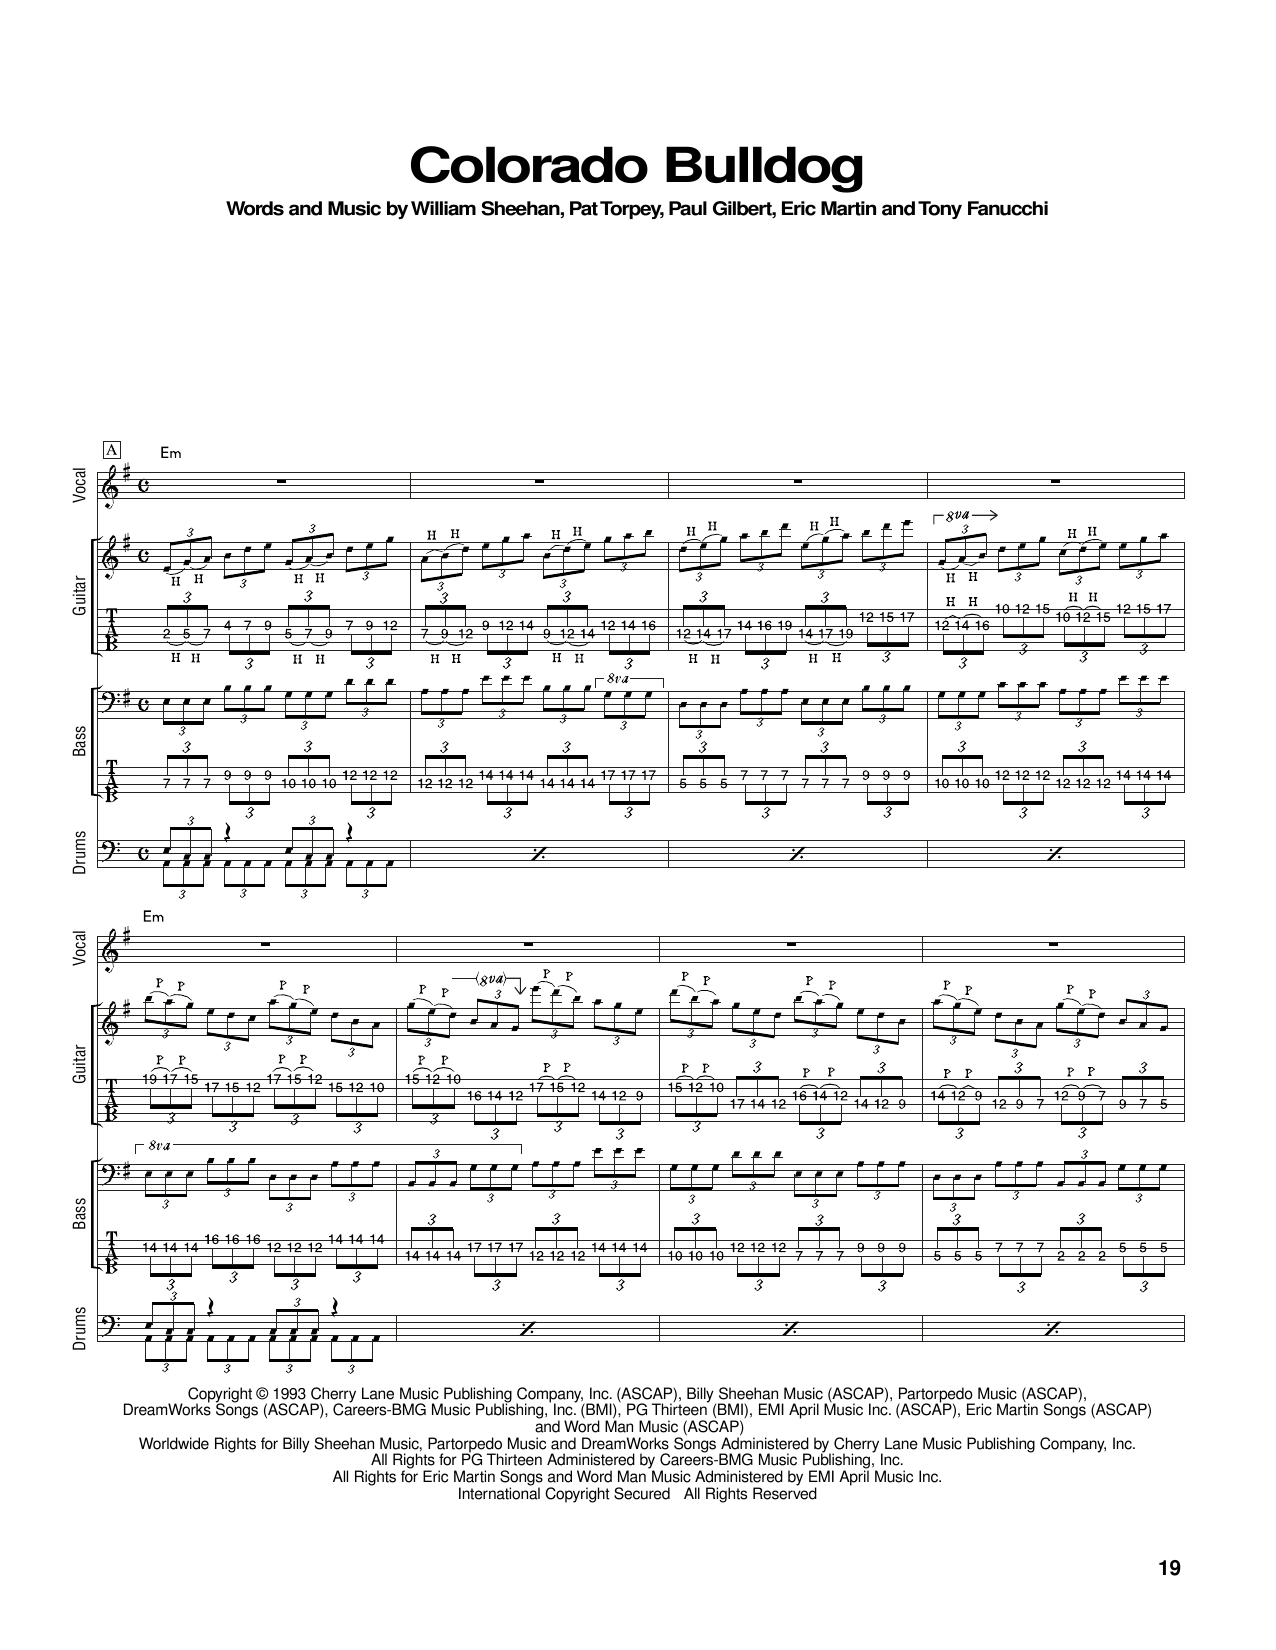 Mr. Big Colorado Bulldog Sheet Music Notes & Chords for Bass Guitar Tab - Download or Print PDF